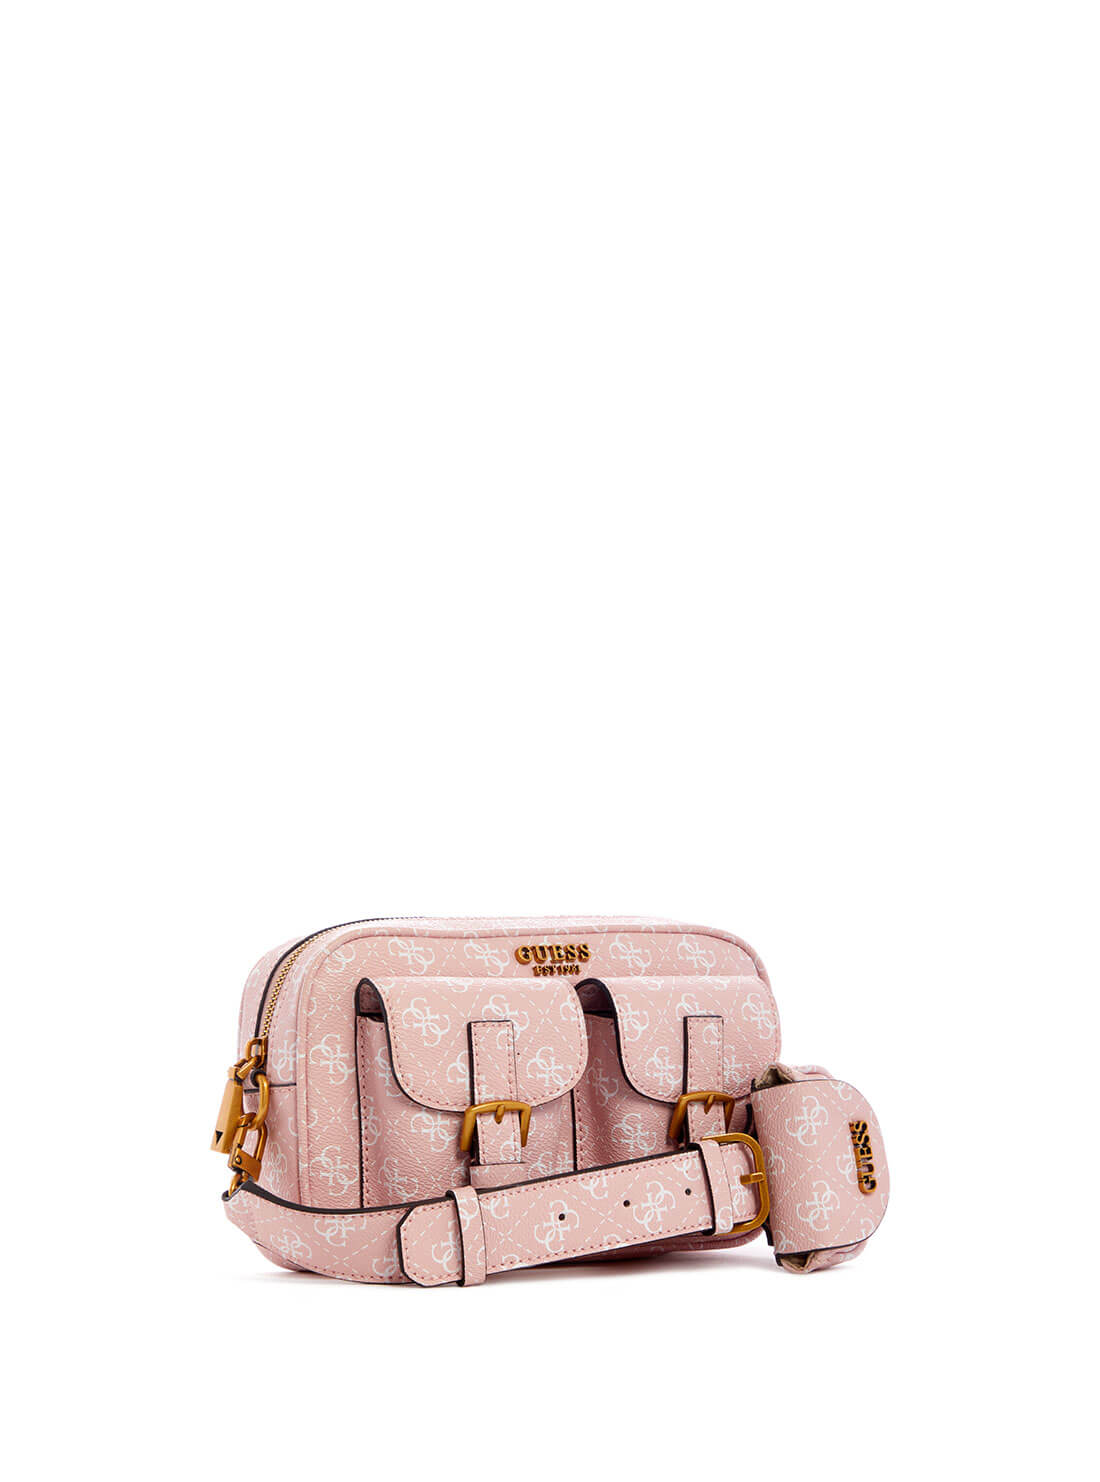 GUESS Womens Pink No Limit Logo Crossbody Bag SB848614 Front Side View